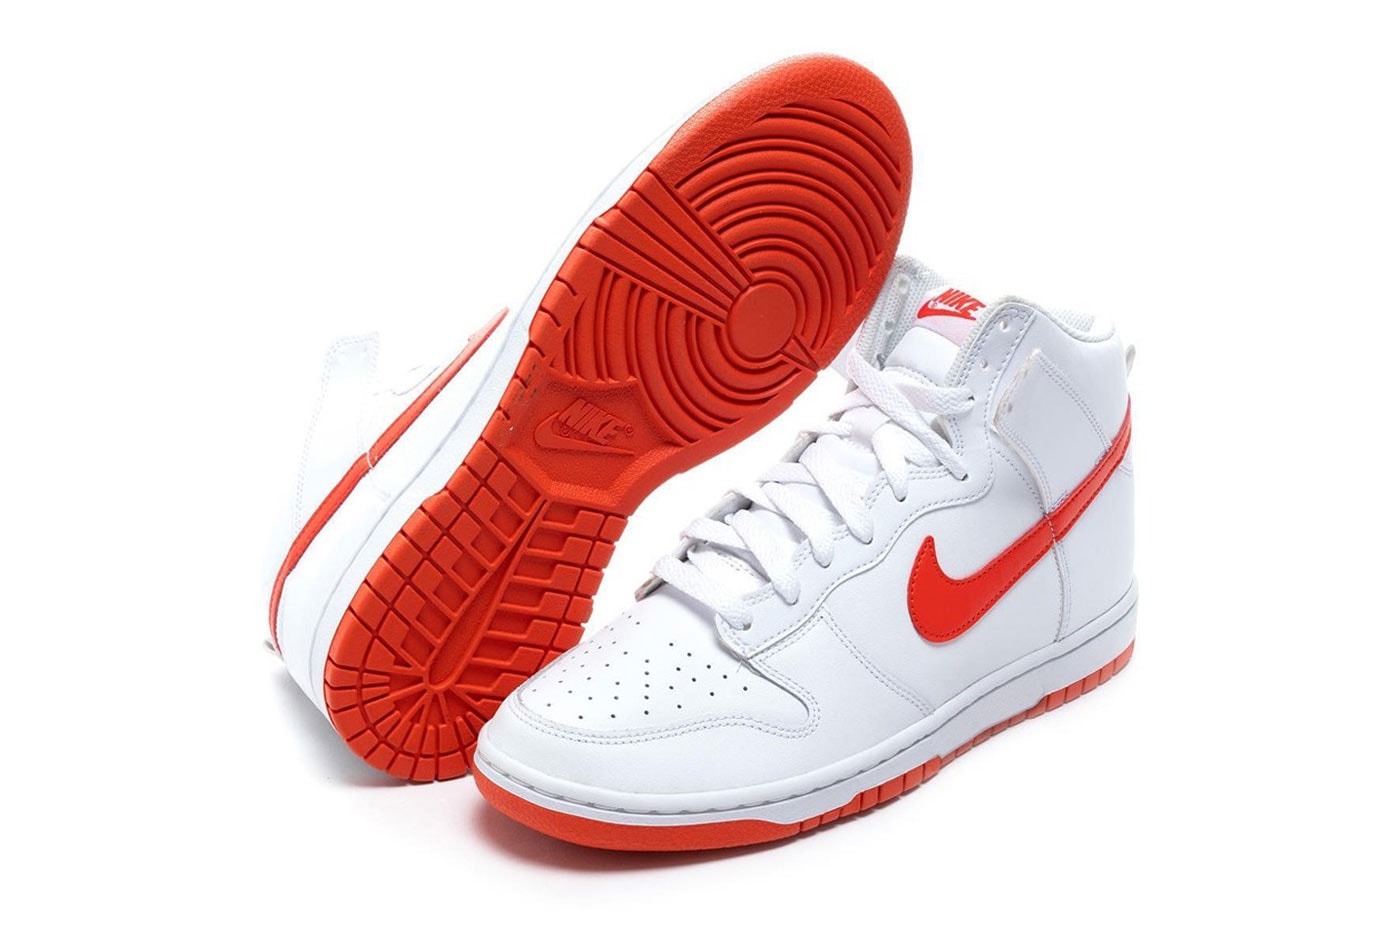 nike sportswear dunk high white orange release date info photos price unreleased sample